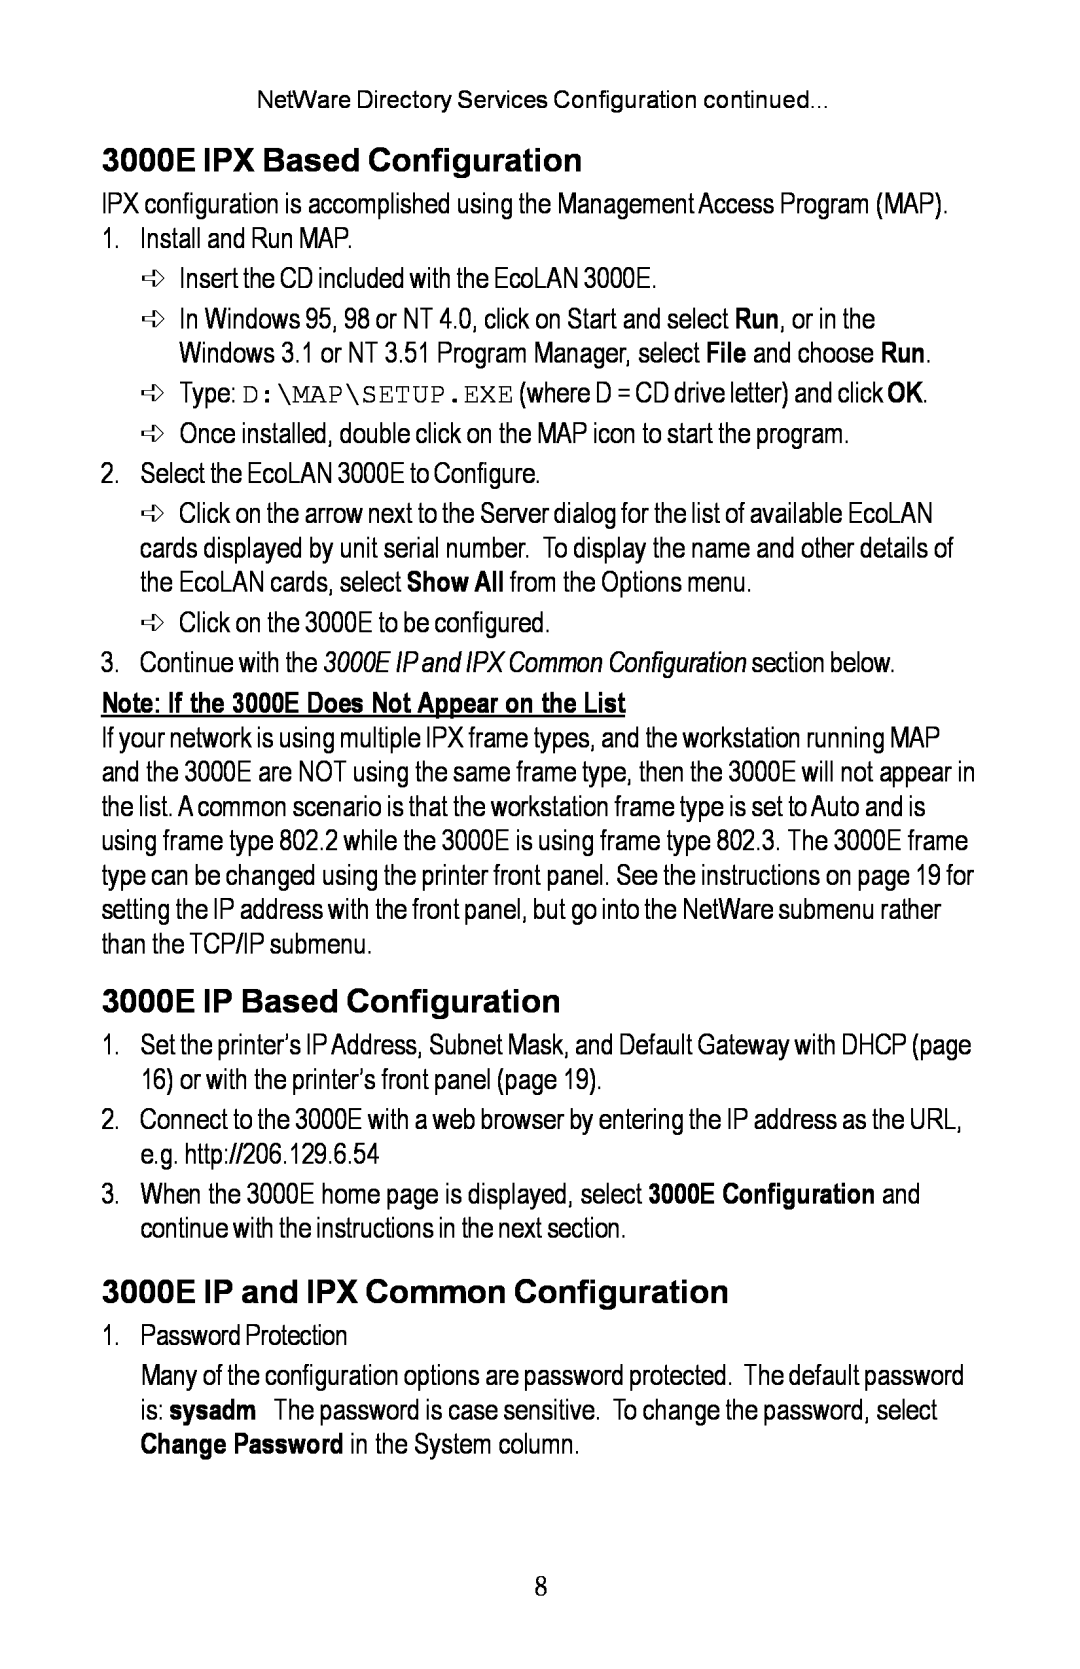 Kyocera EcoLAN 3000E 3000E IPX Based Configuration, 3000E IP Based Configuration, 3000E IP and IPX Common Configuration 